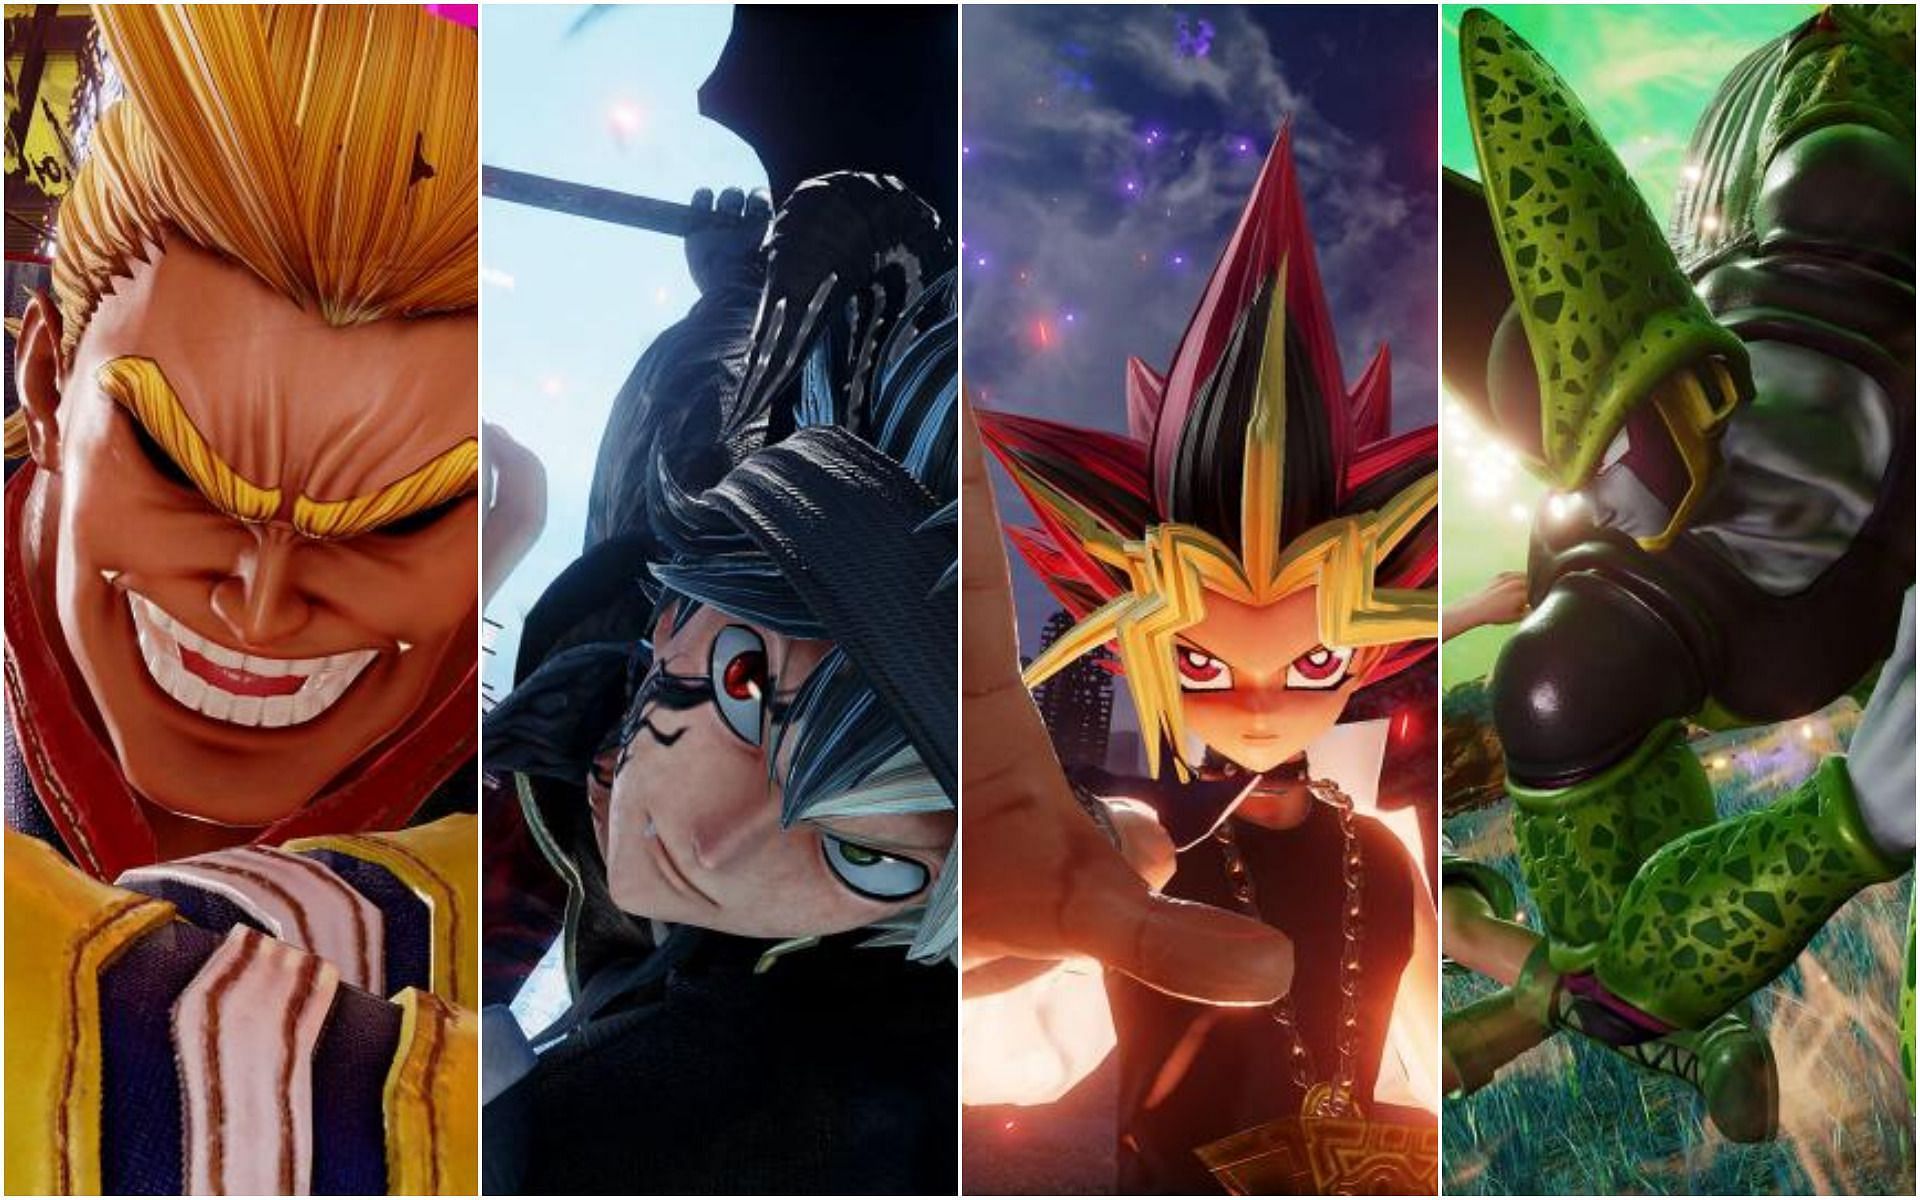 The game is home to fan-favorite manga and anime characters (Image via Sportskeeda)